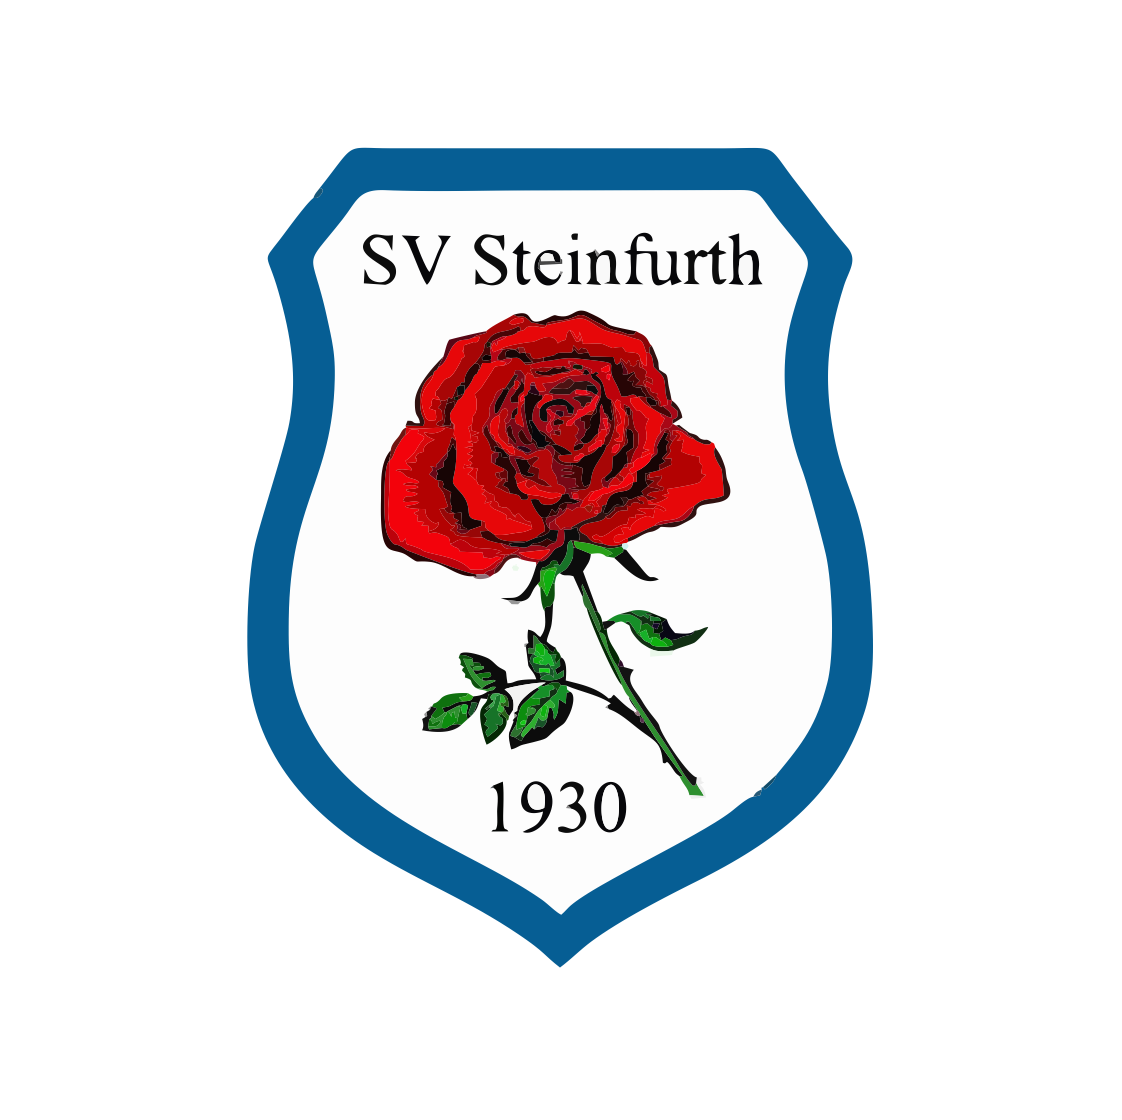 SV Steinfurth